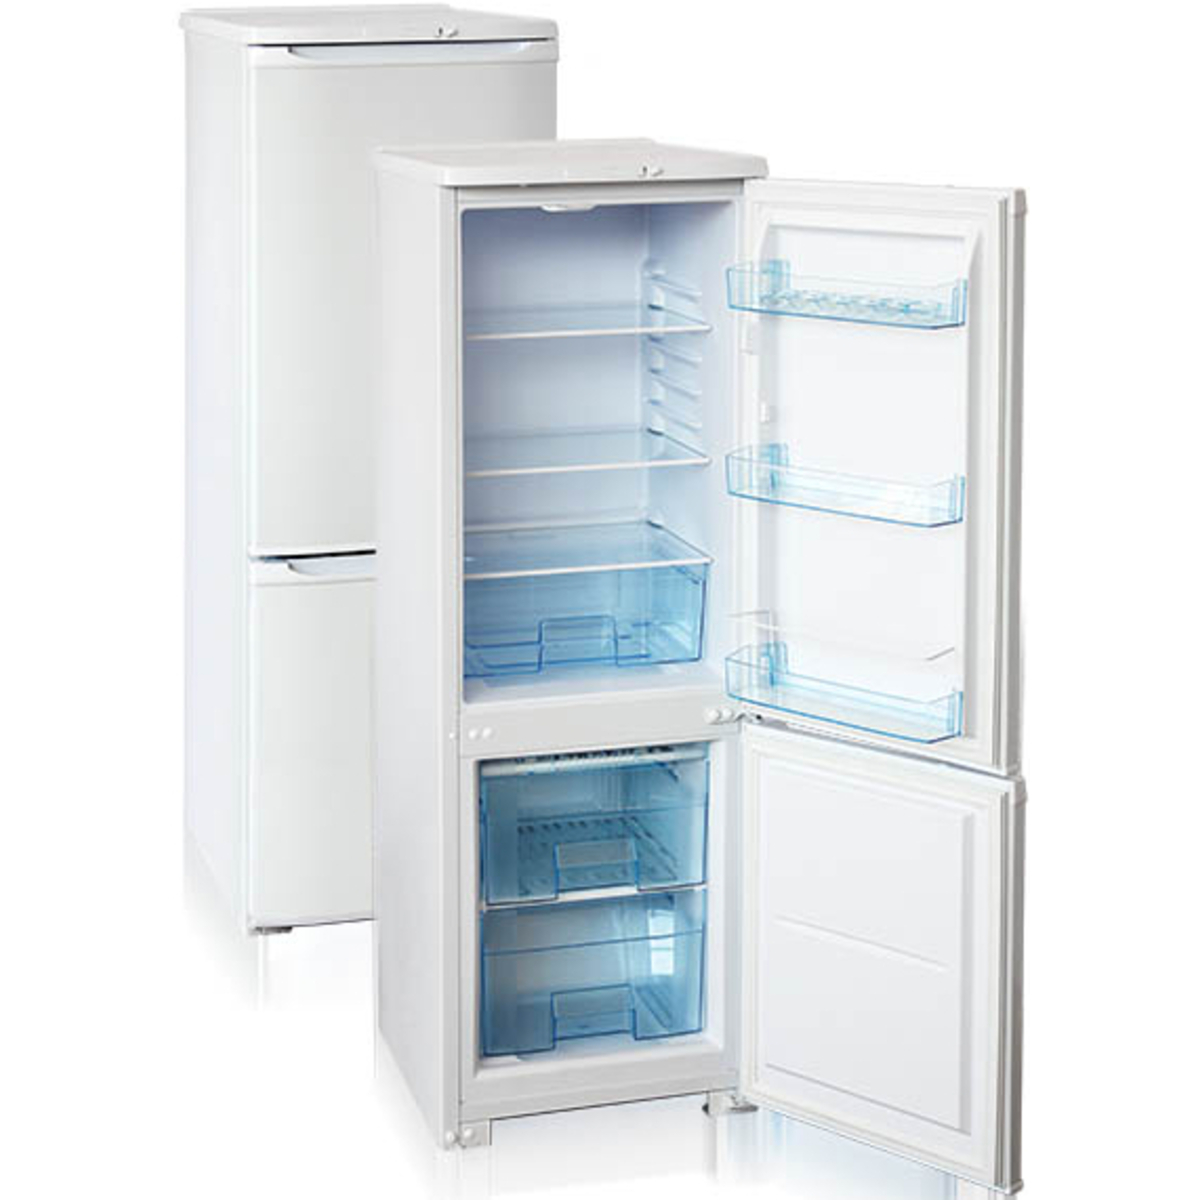 Холодильник Бирюса Б-118, белый